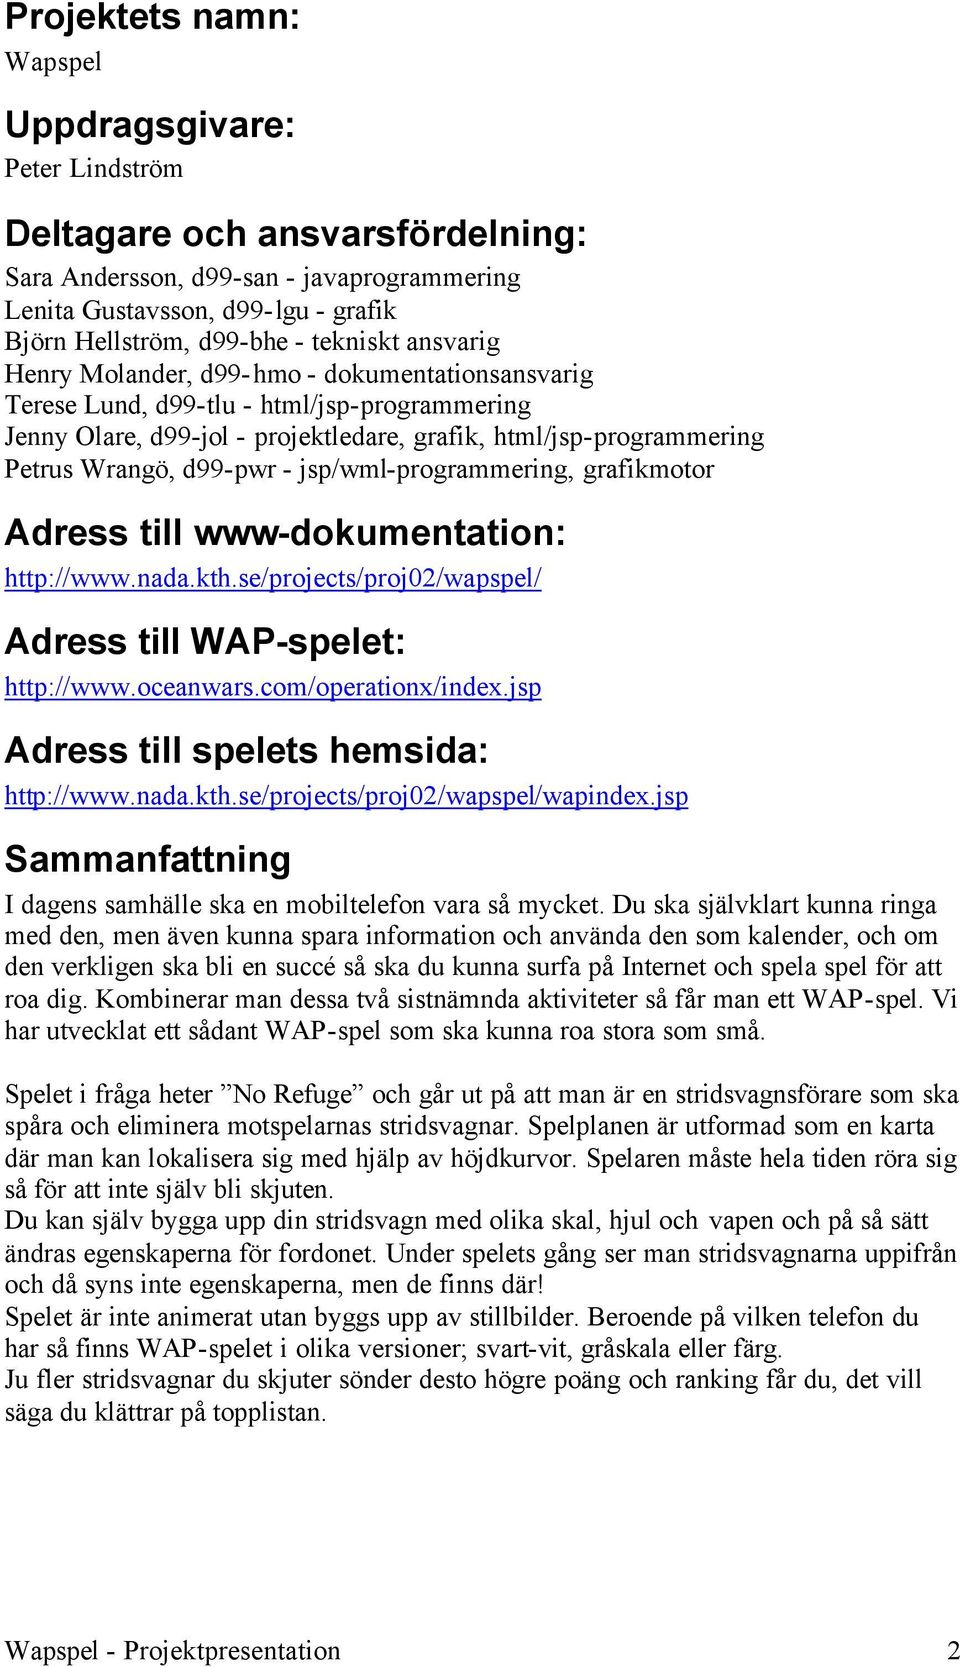 d99-pwr - jsp/wml-programmering, grafikmotor Adress till www-dokumentation: http://www.nada.kth.se/projects/proj02/wapspel/ Adress till WAP-spelet: http://www.oceanwars.com/operationx/index.